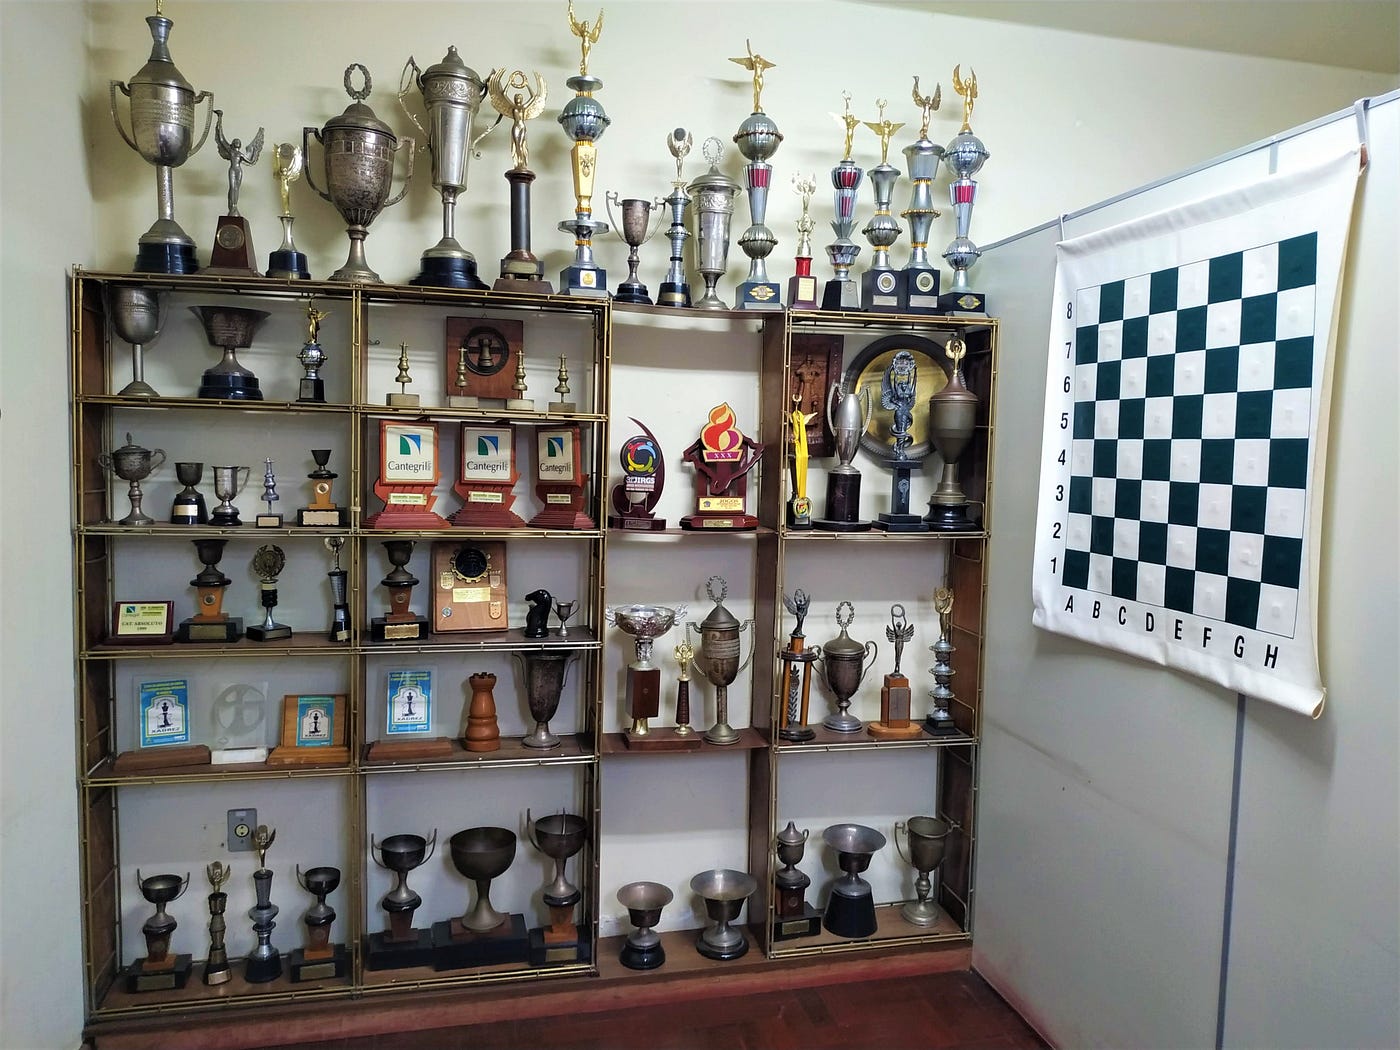 Clube de Xadrez do IFRO Campus Calama - club de xadrez 